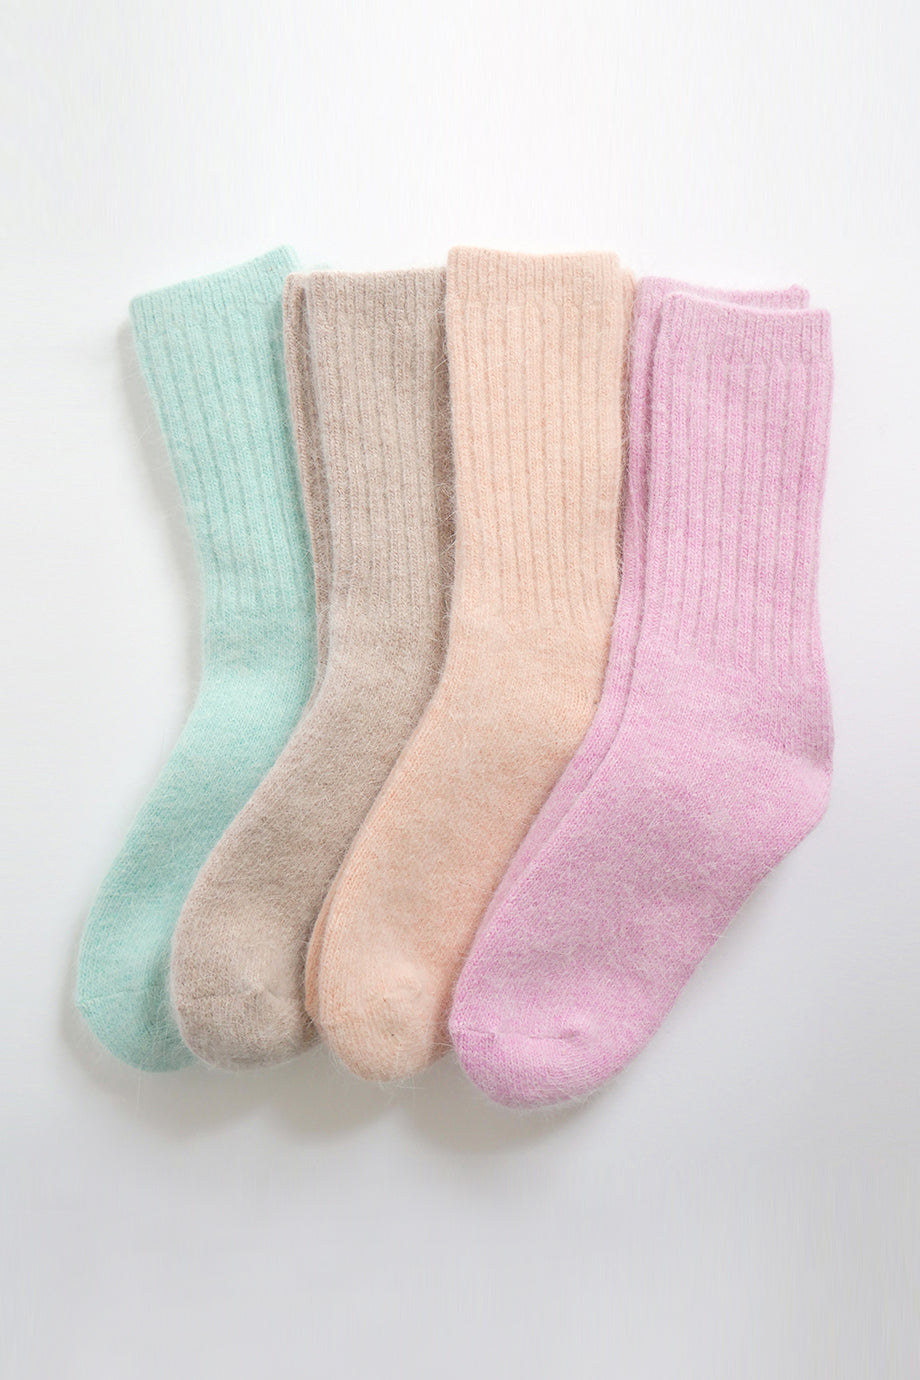 Super Soft Wool Socks - Mint